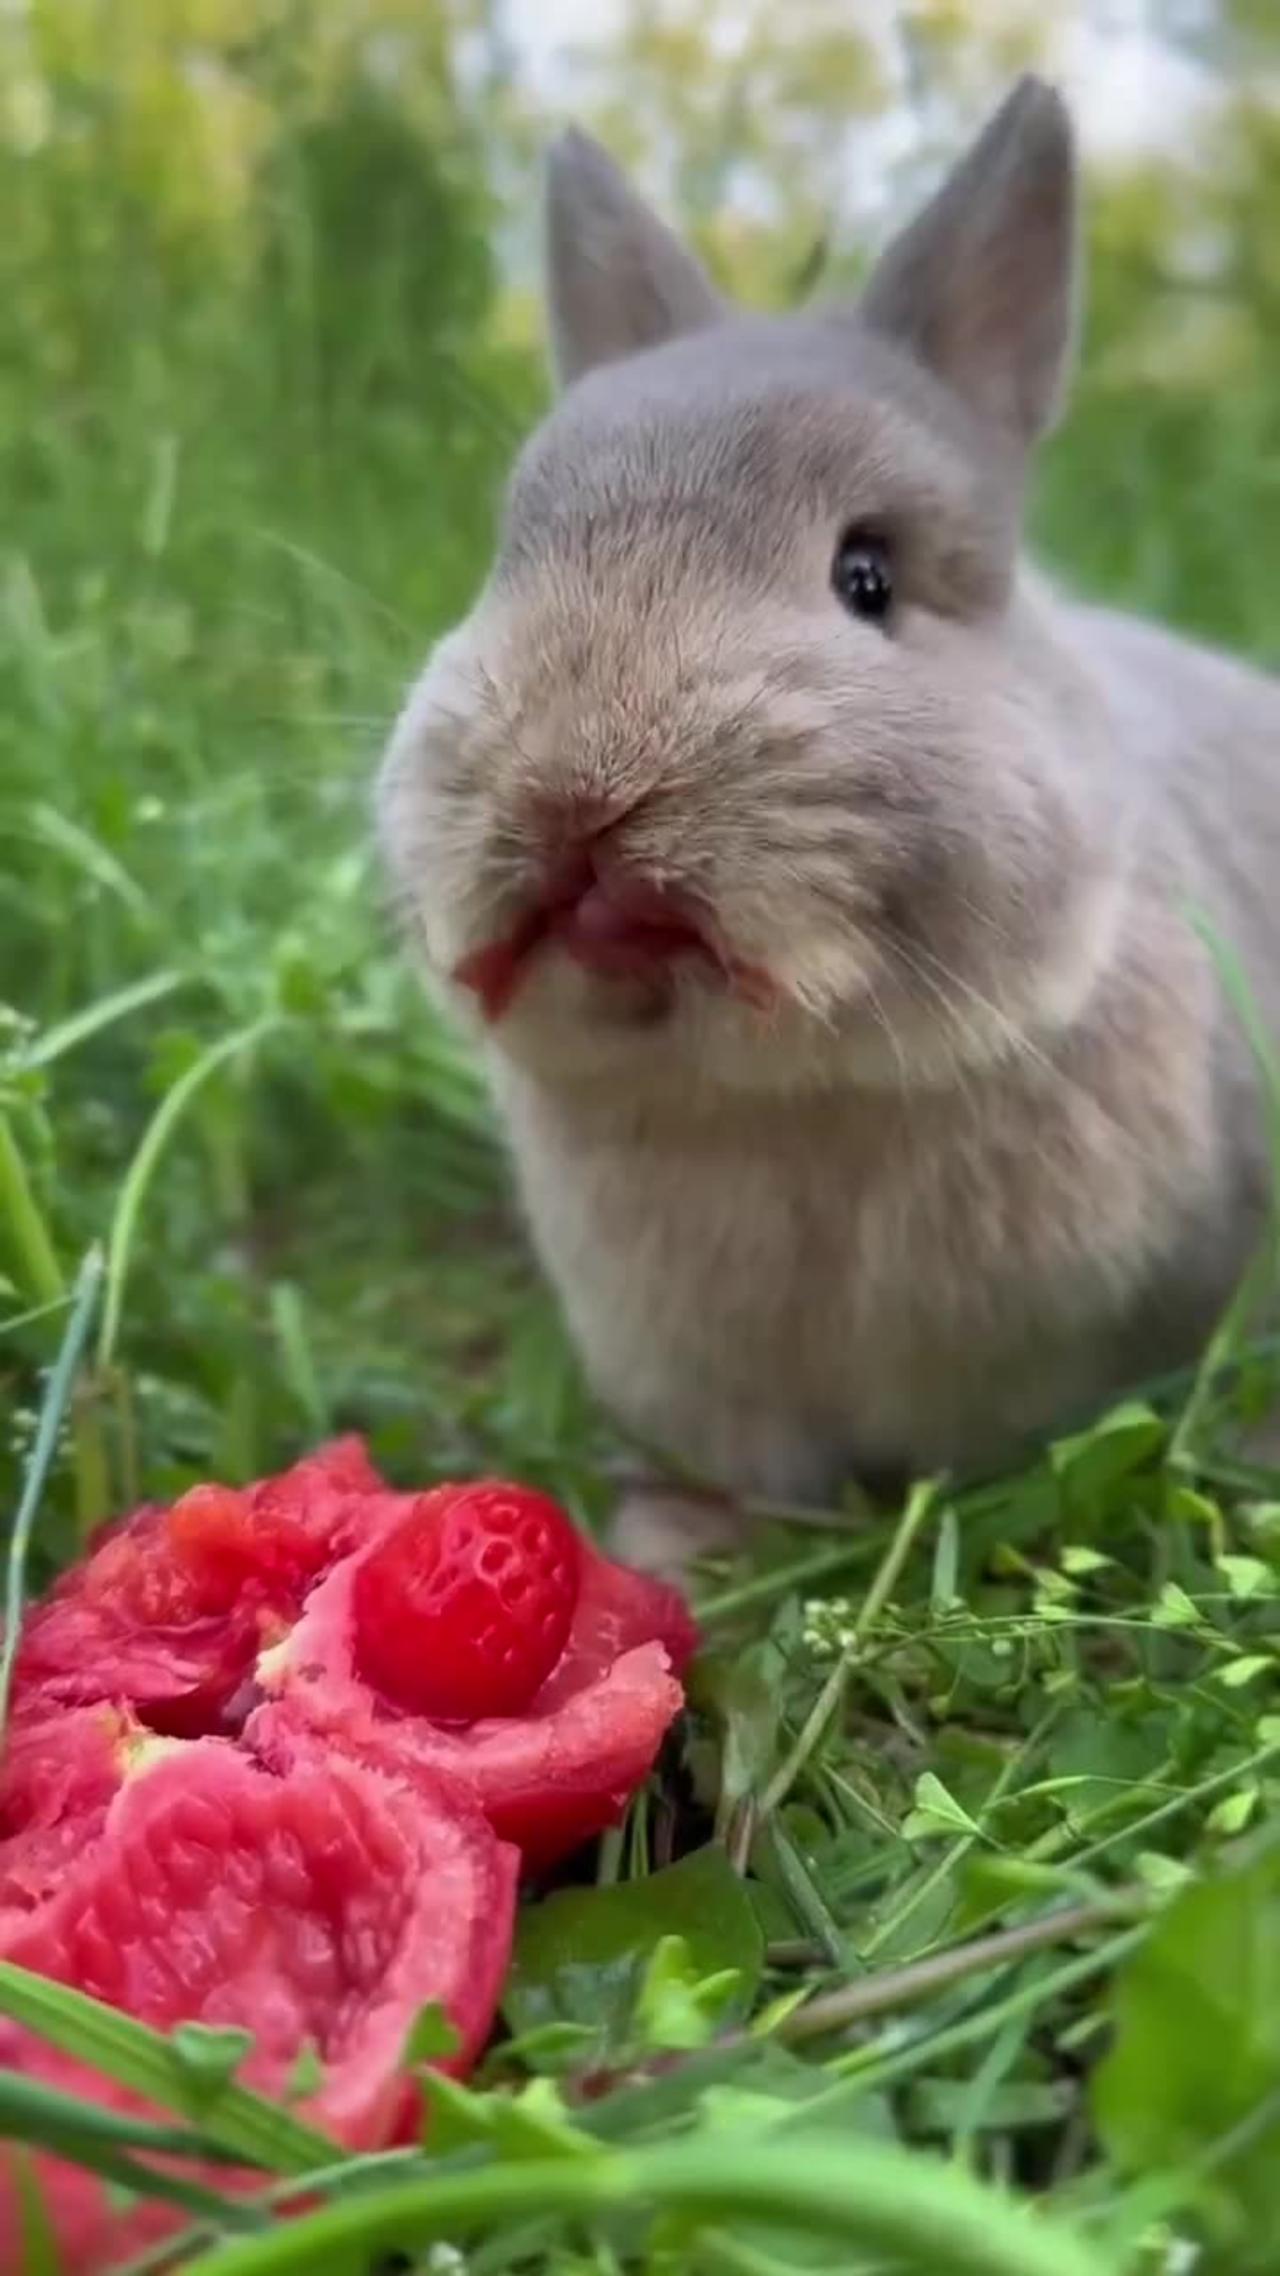 cute rabbit eating strabery